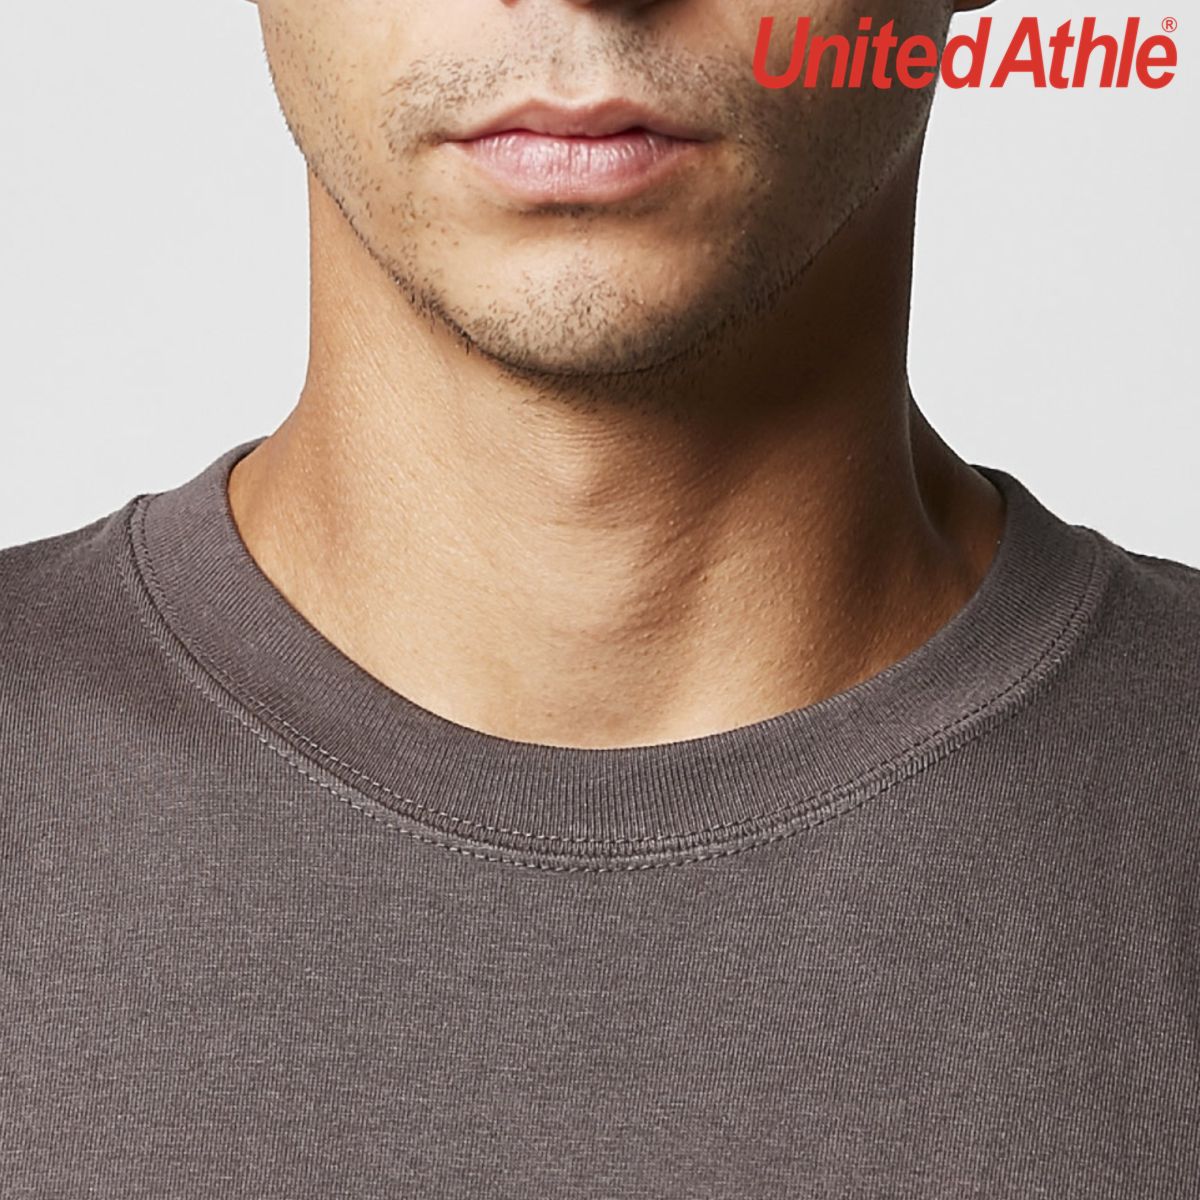 UA5001 - United Athle 190g (ADULT & KID SIZE) Cotton T-shirt